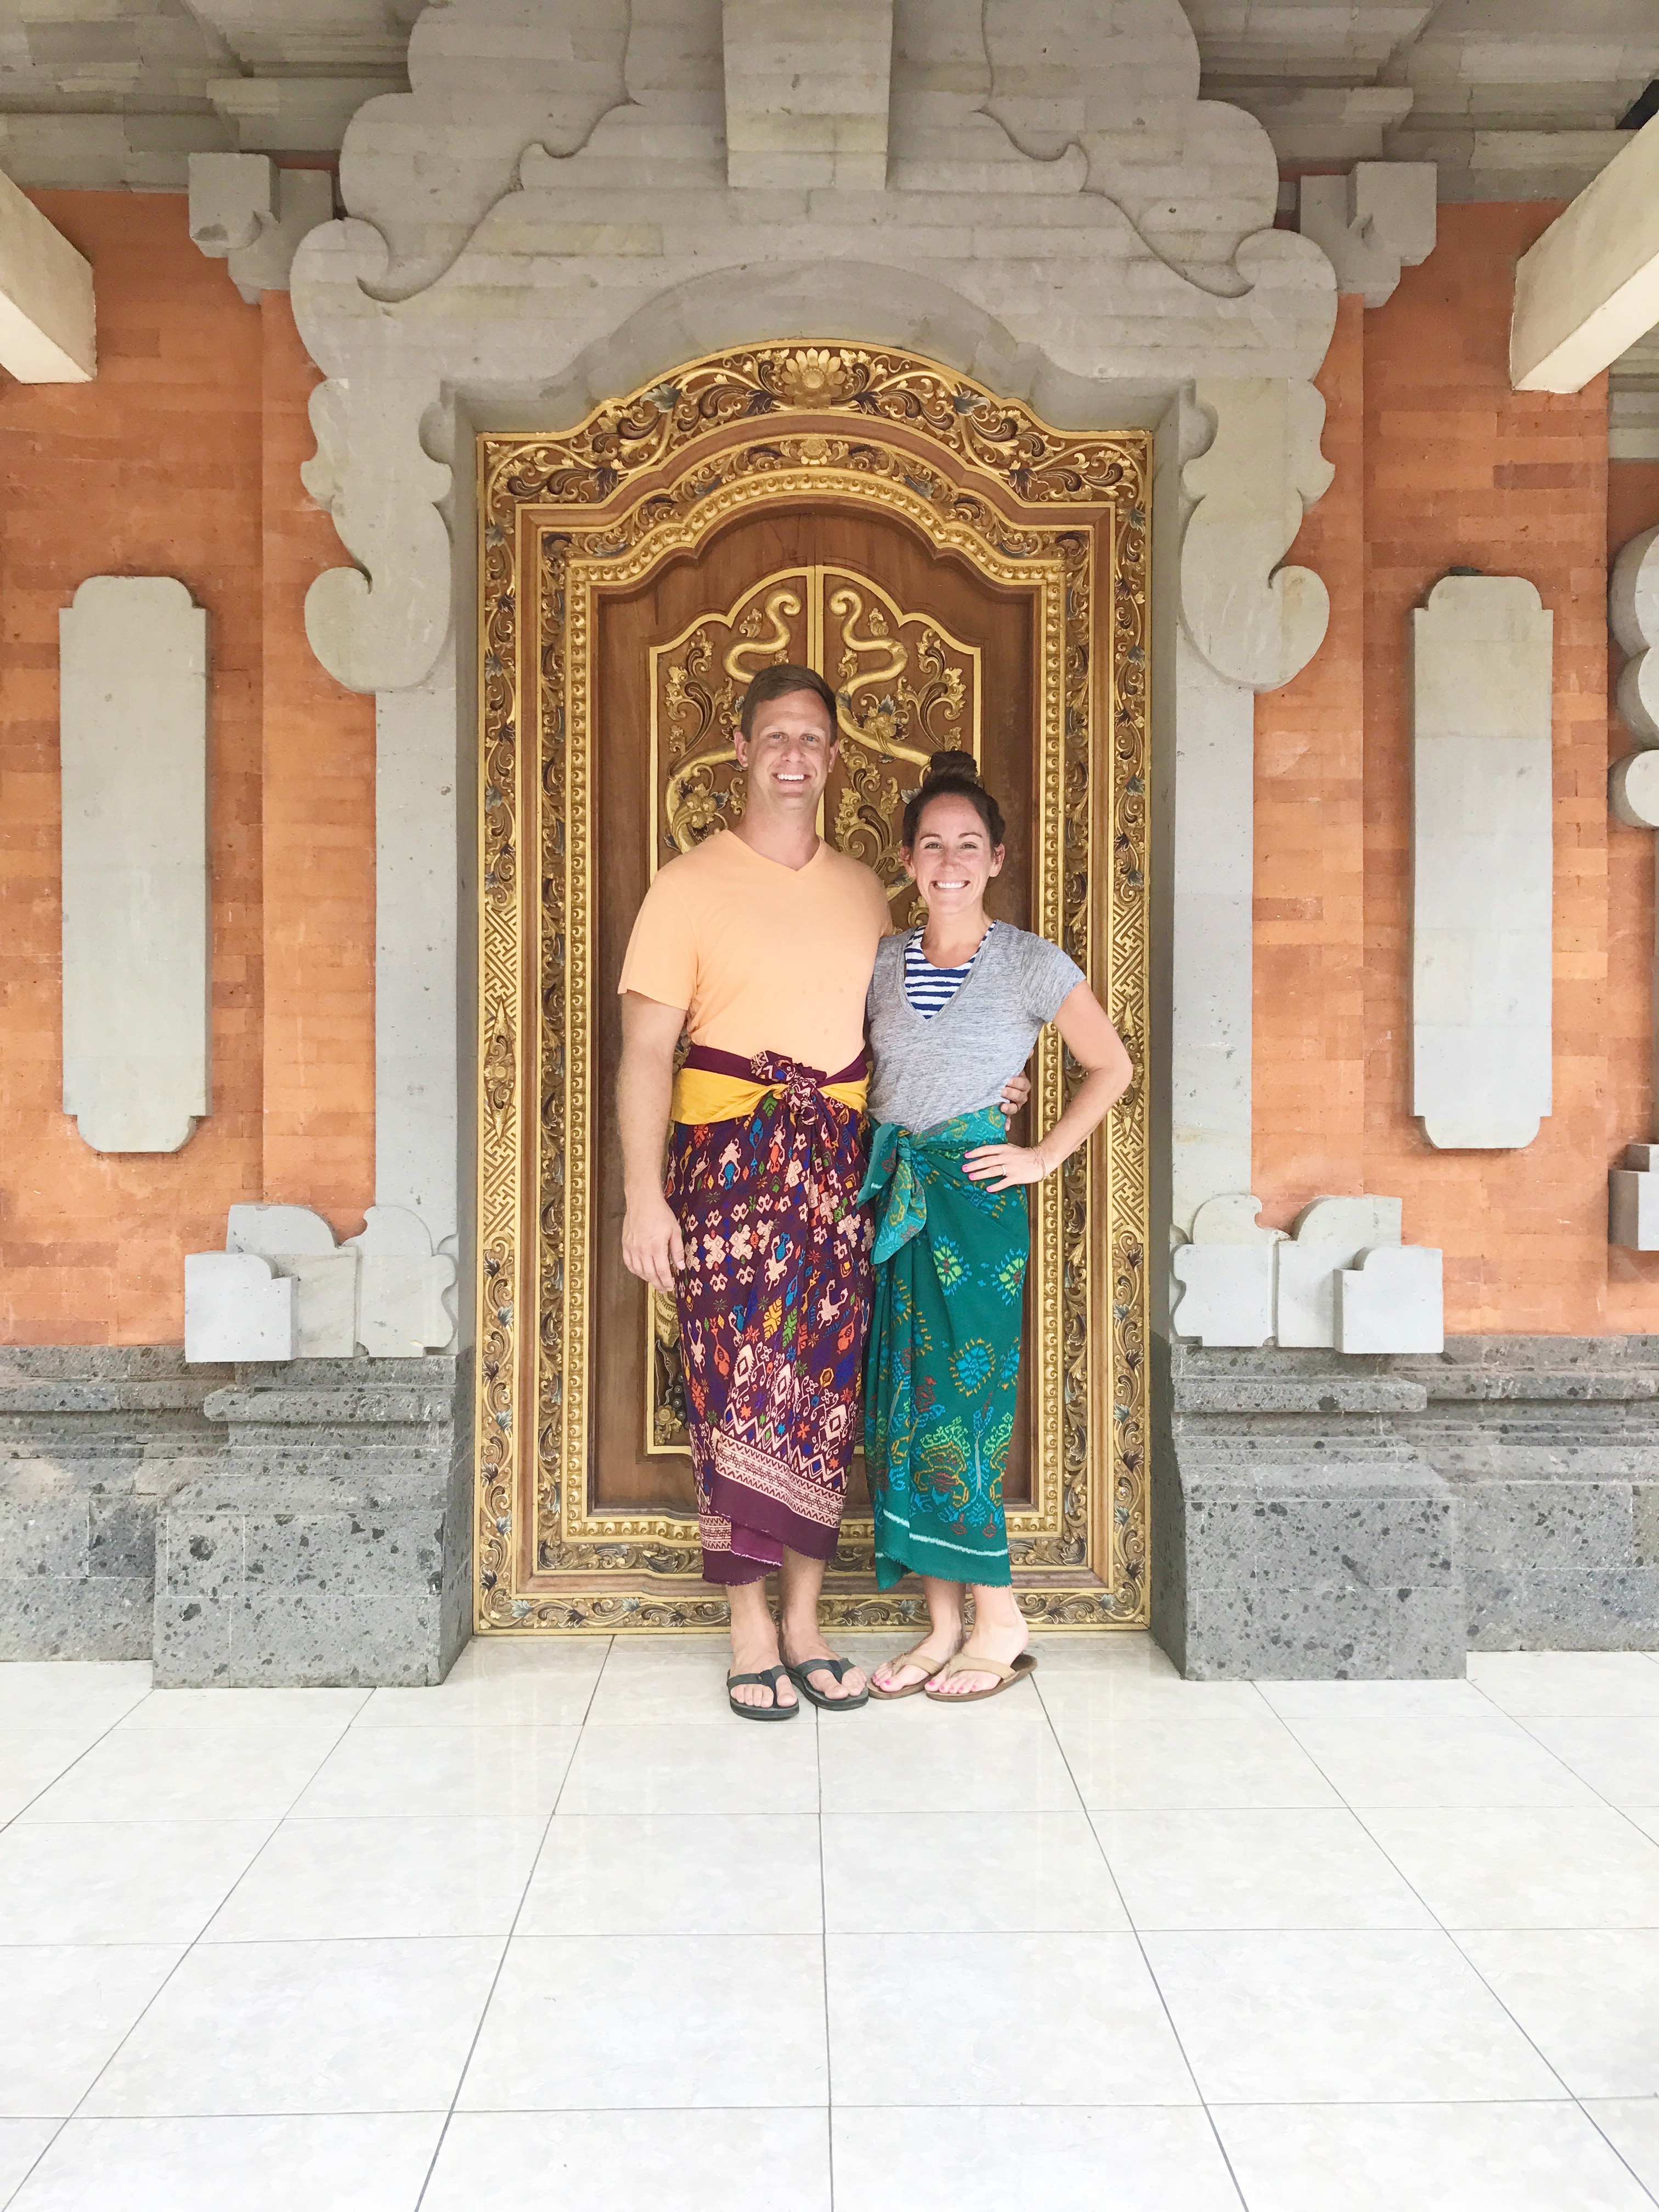 Tirta Empul Temple - Ubud, Bali, Indonesia - Our Bali Trip - 12 Things You Can't Miss In Ubud Bali - Ubud Bali - Ubud Monkey Forest - Ubud Travel Blog - Ubud Bali Hotels - What To Do In Ubud - #ubud #bali #travelblog